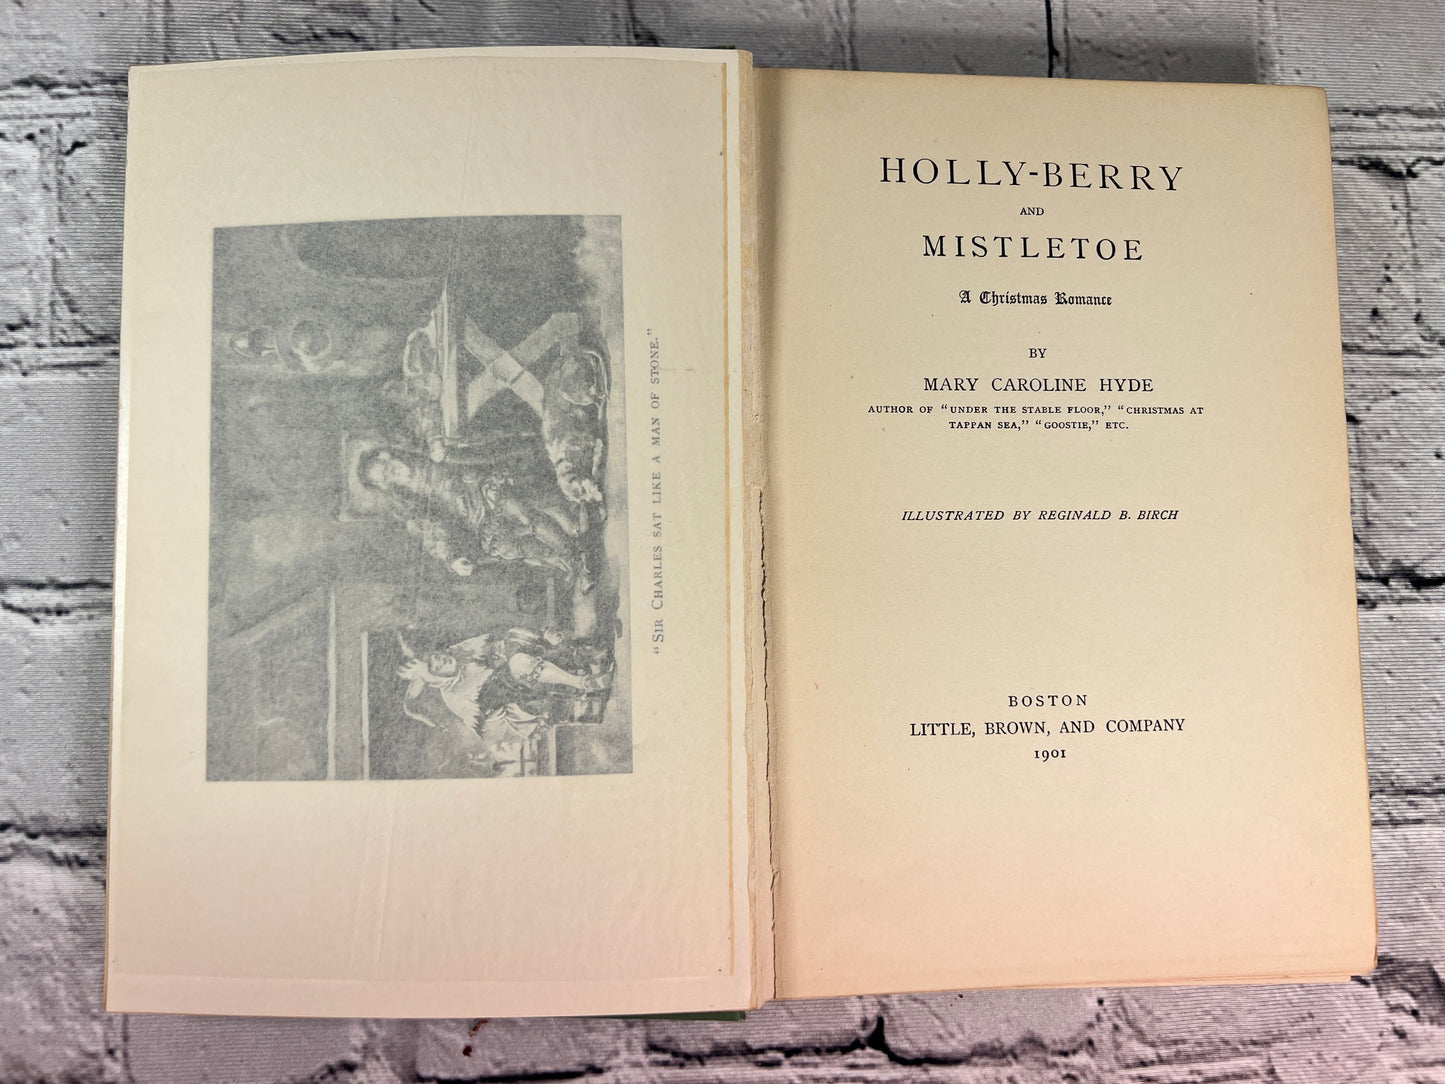 Holly-Berry and Mistletoe by Mary Caroline Hyde [1901]